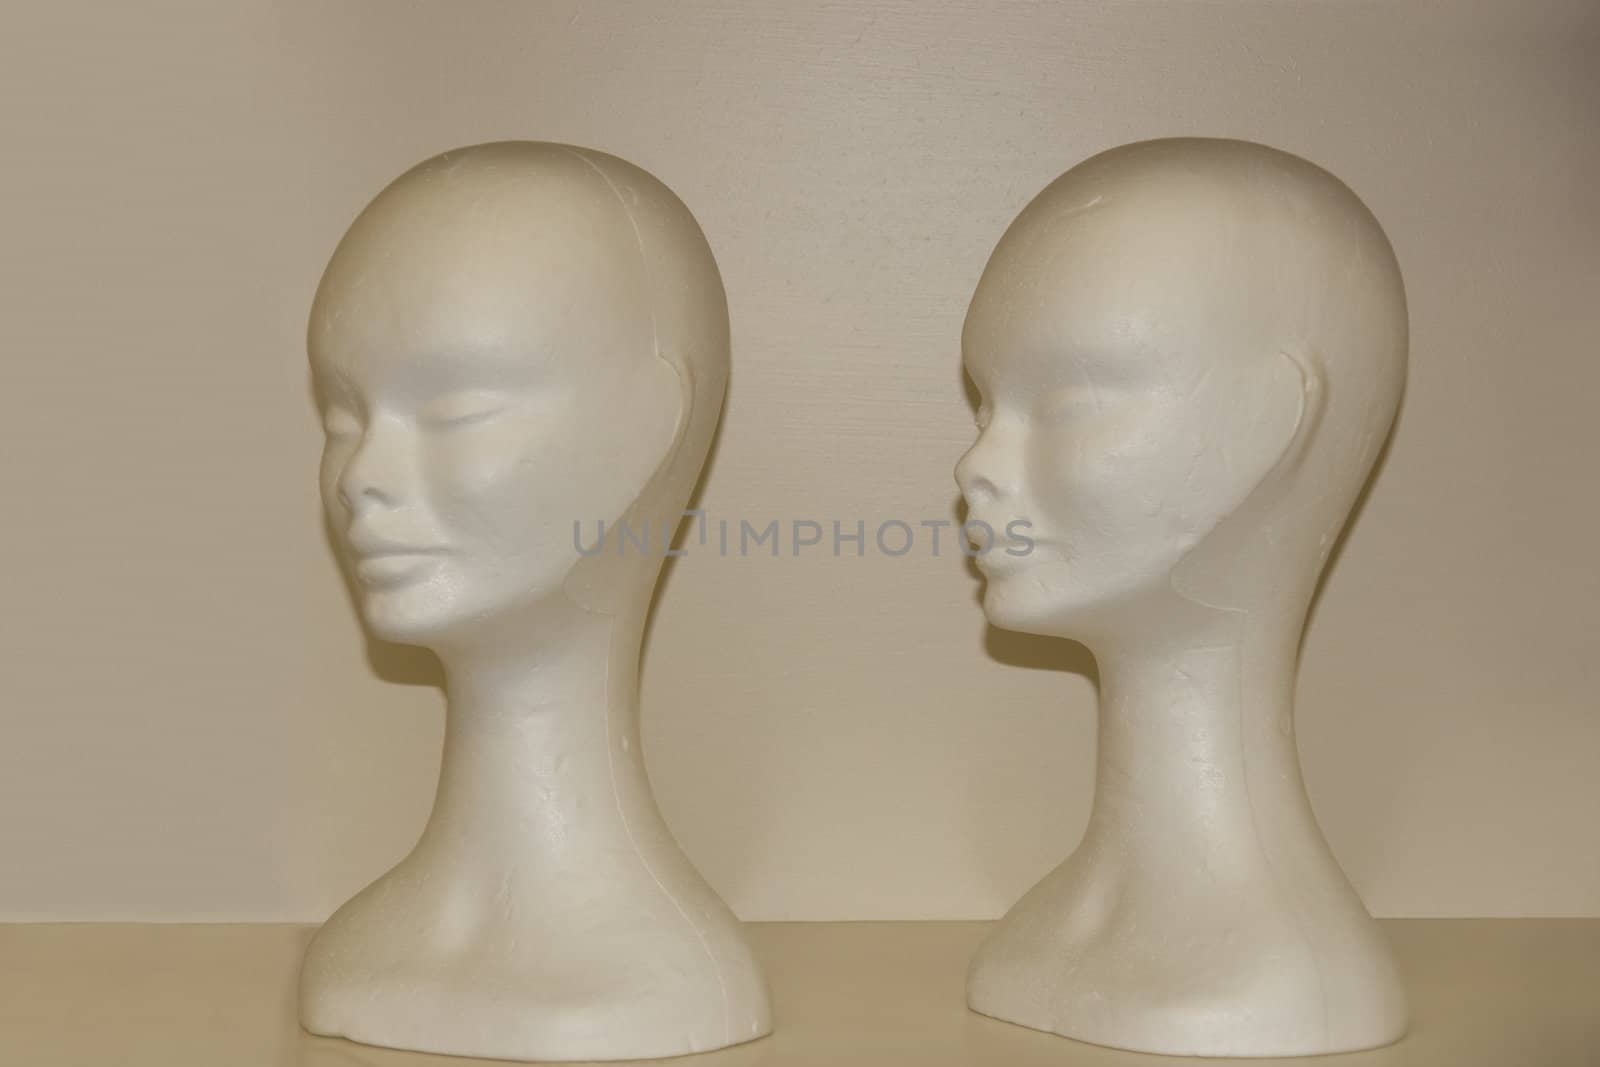 two female pollystyrene female modeling heads on a shelf